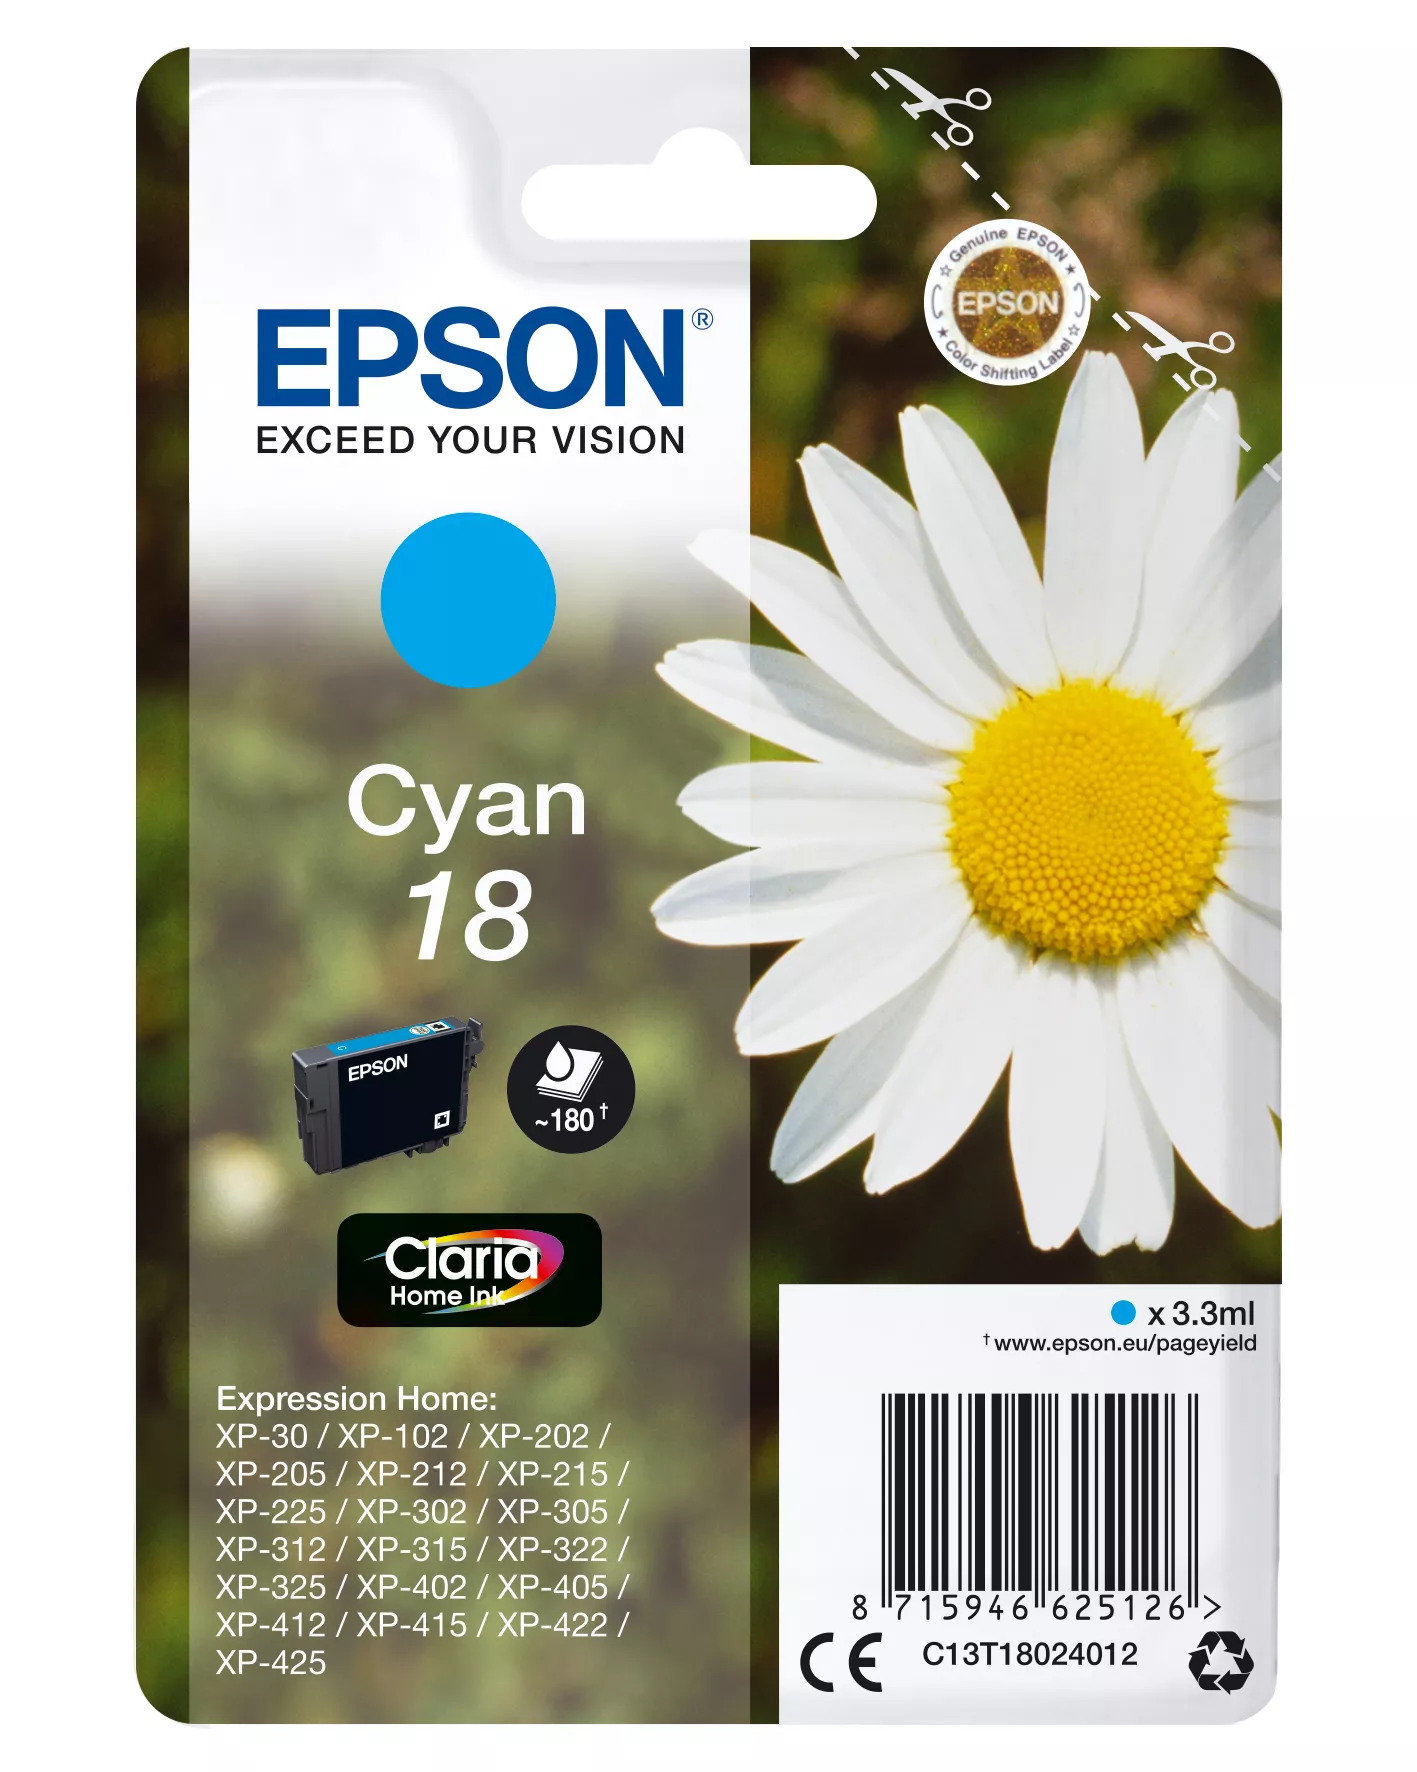 Achat EPSON 18 cartouche dencre cyan capacité standard 3.3ml - 8715946625126